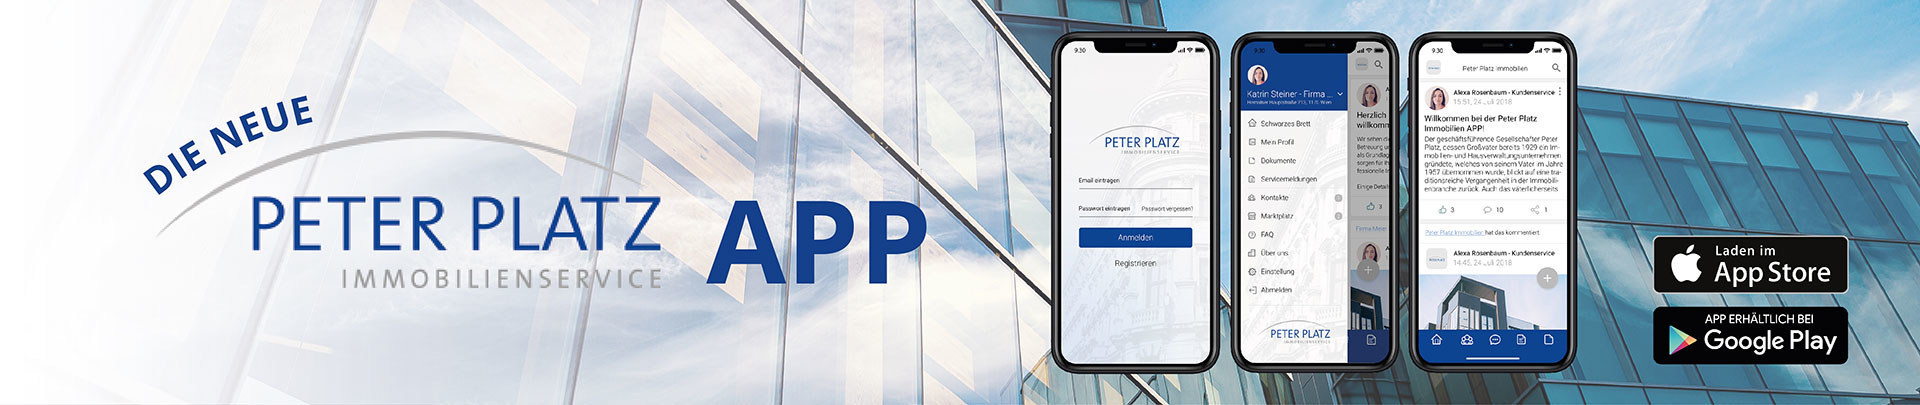 Peter Platz App